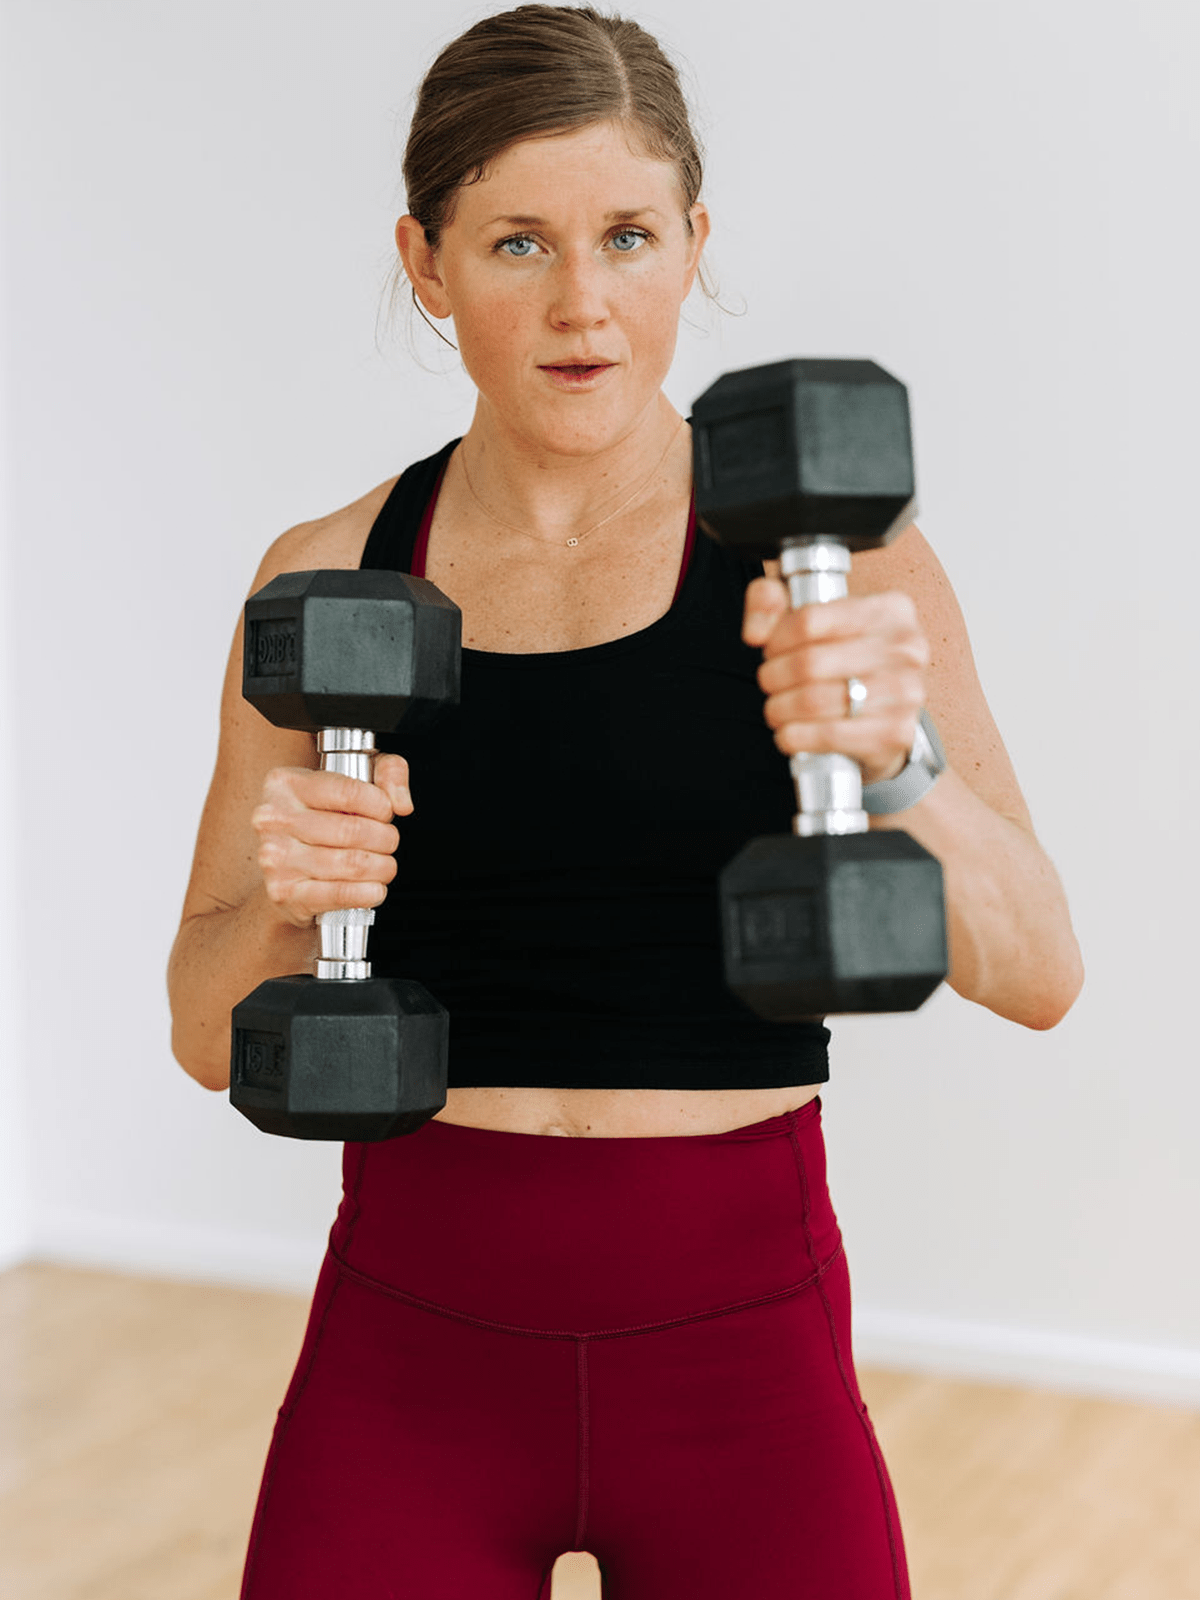 5 Arm Exercises for Women (Shoulder, Bi + Tri) - Nourish, Move, Love